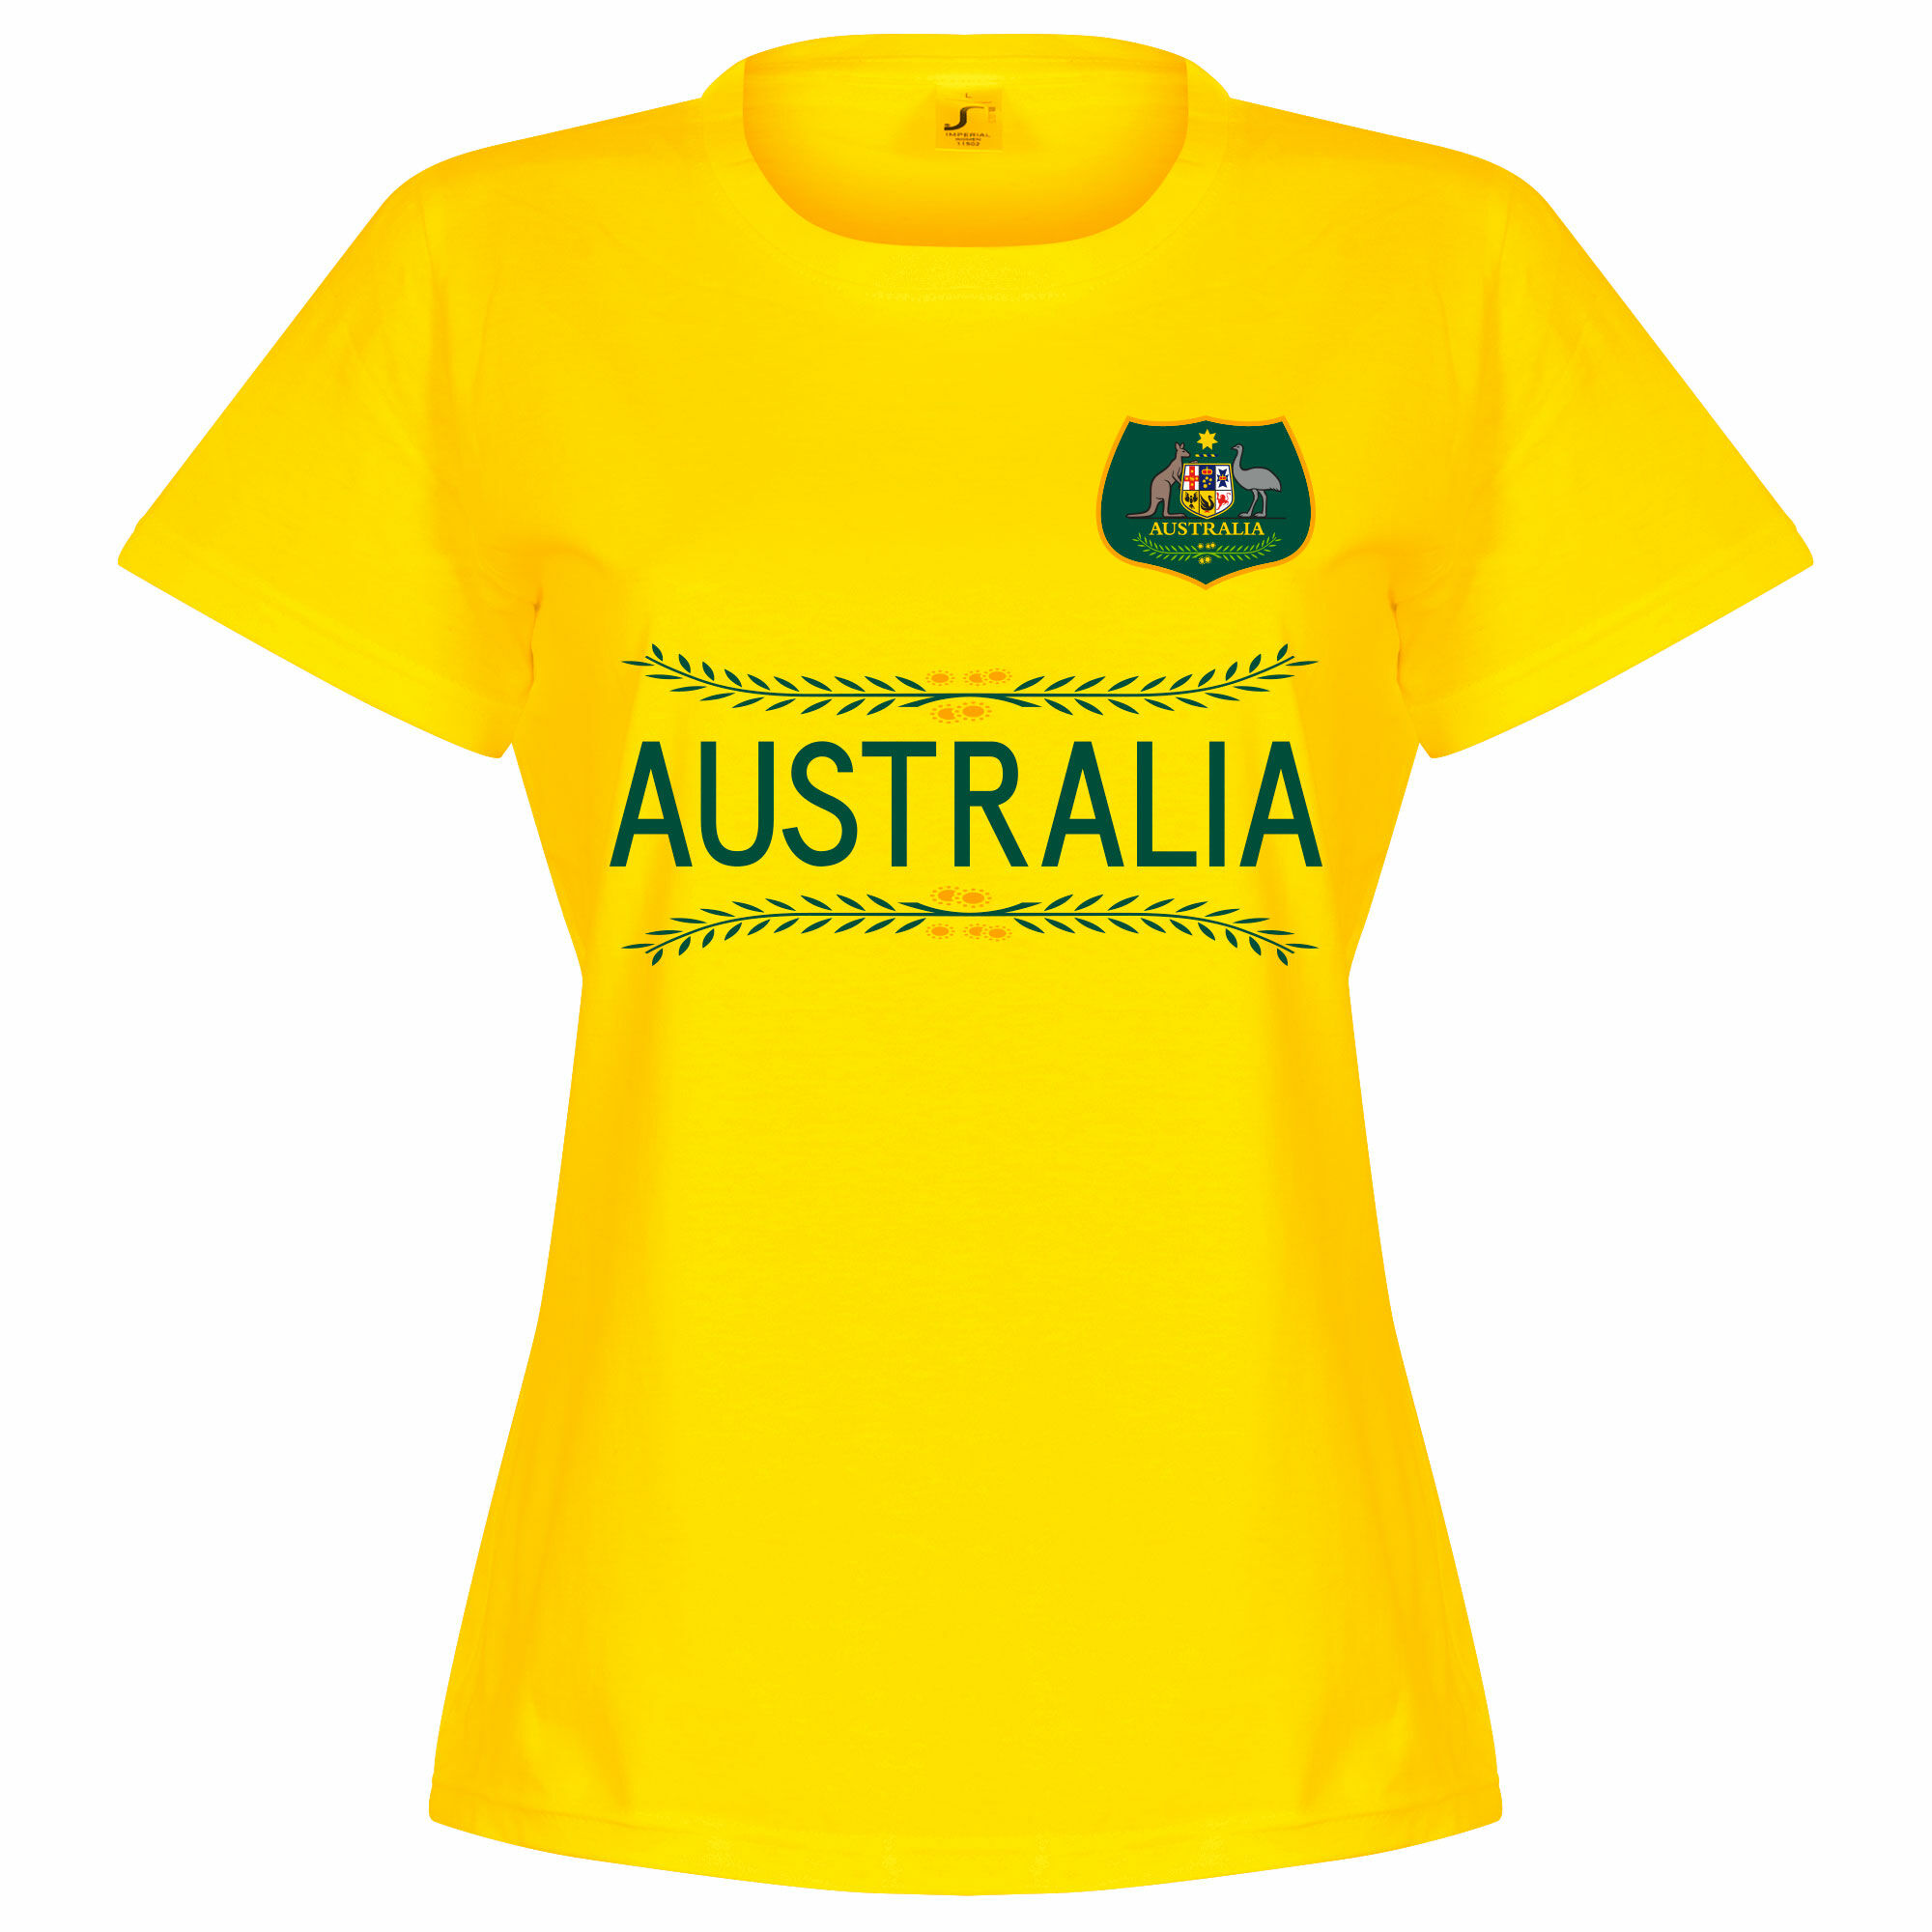 Austrálie - Tričko dámské - žluté